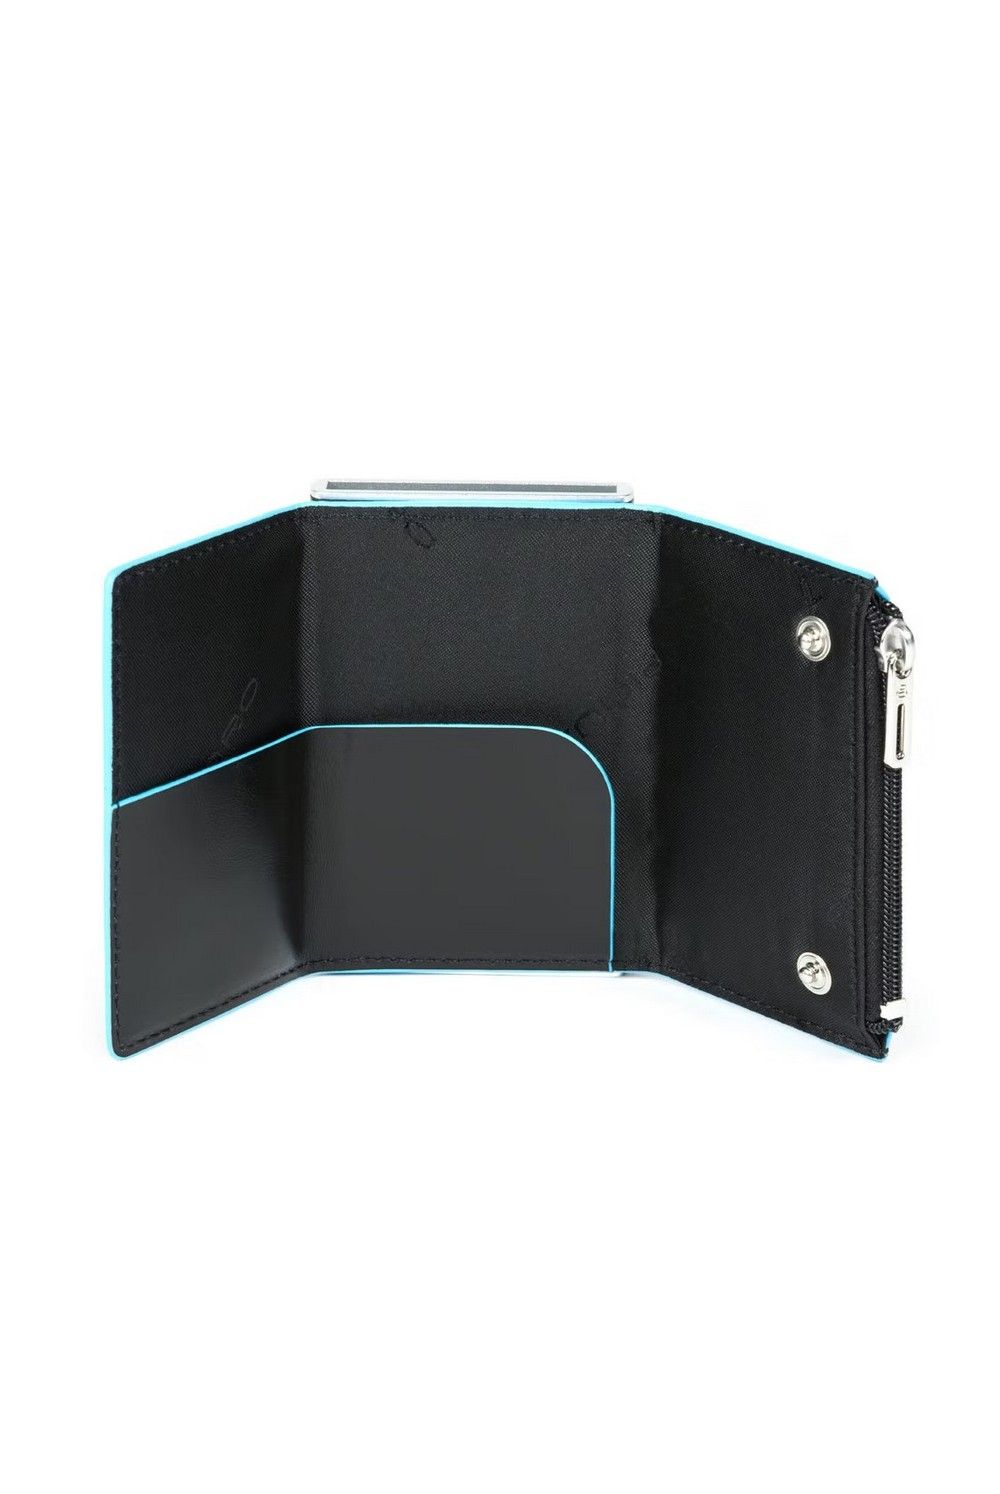 Piquadro credit card case Blue Square coin pocket